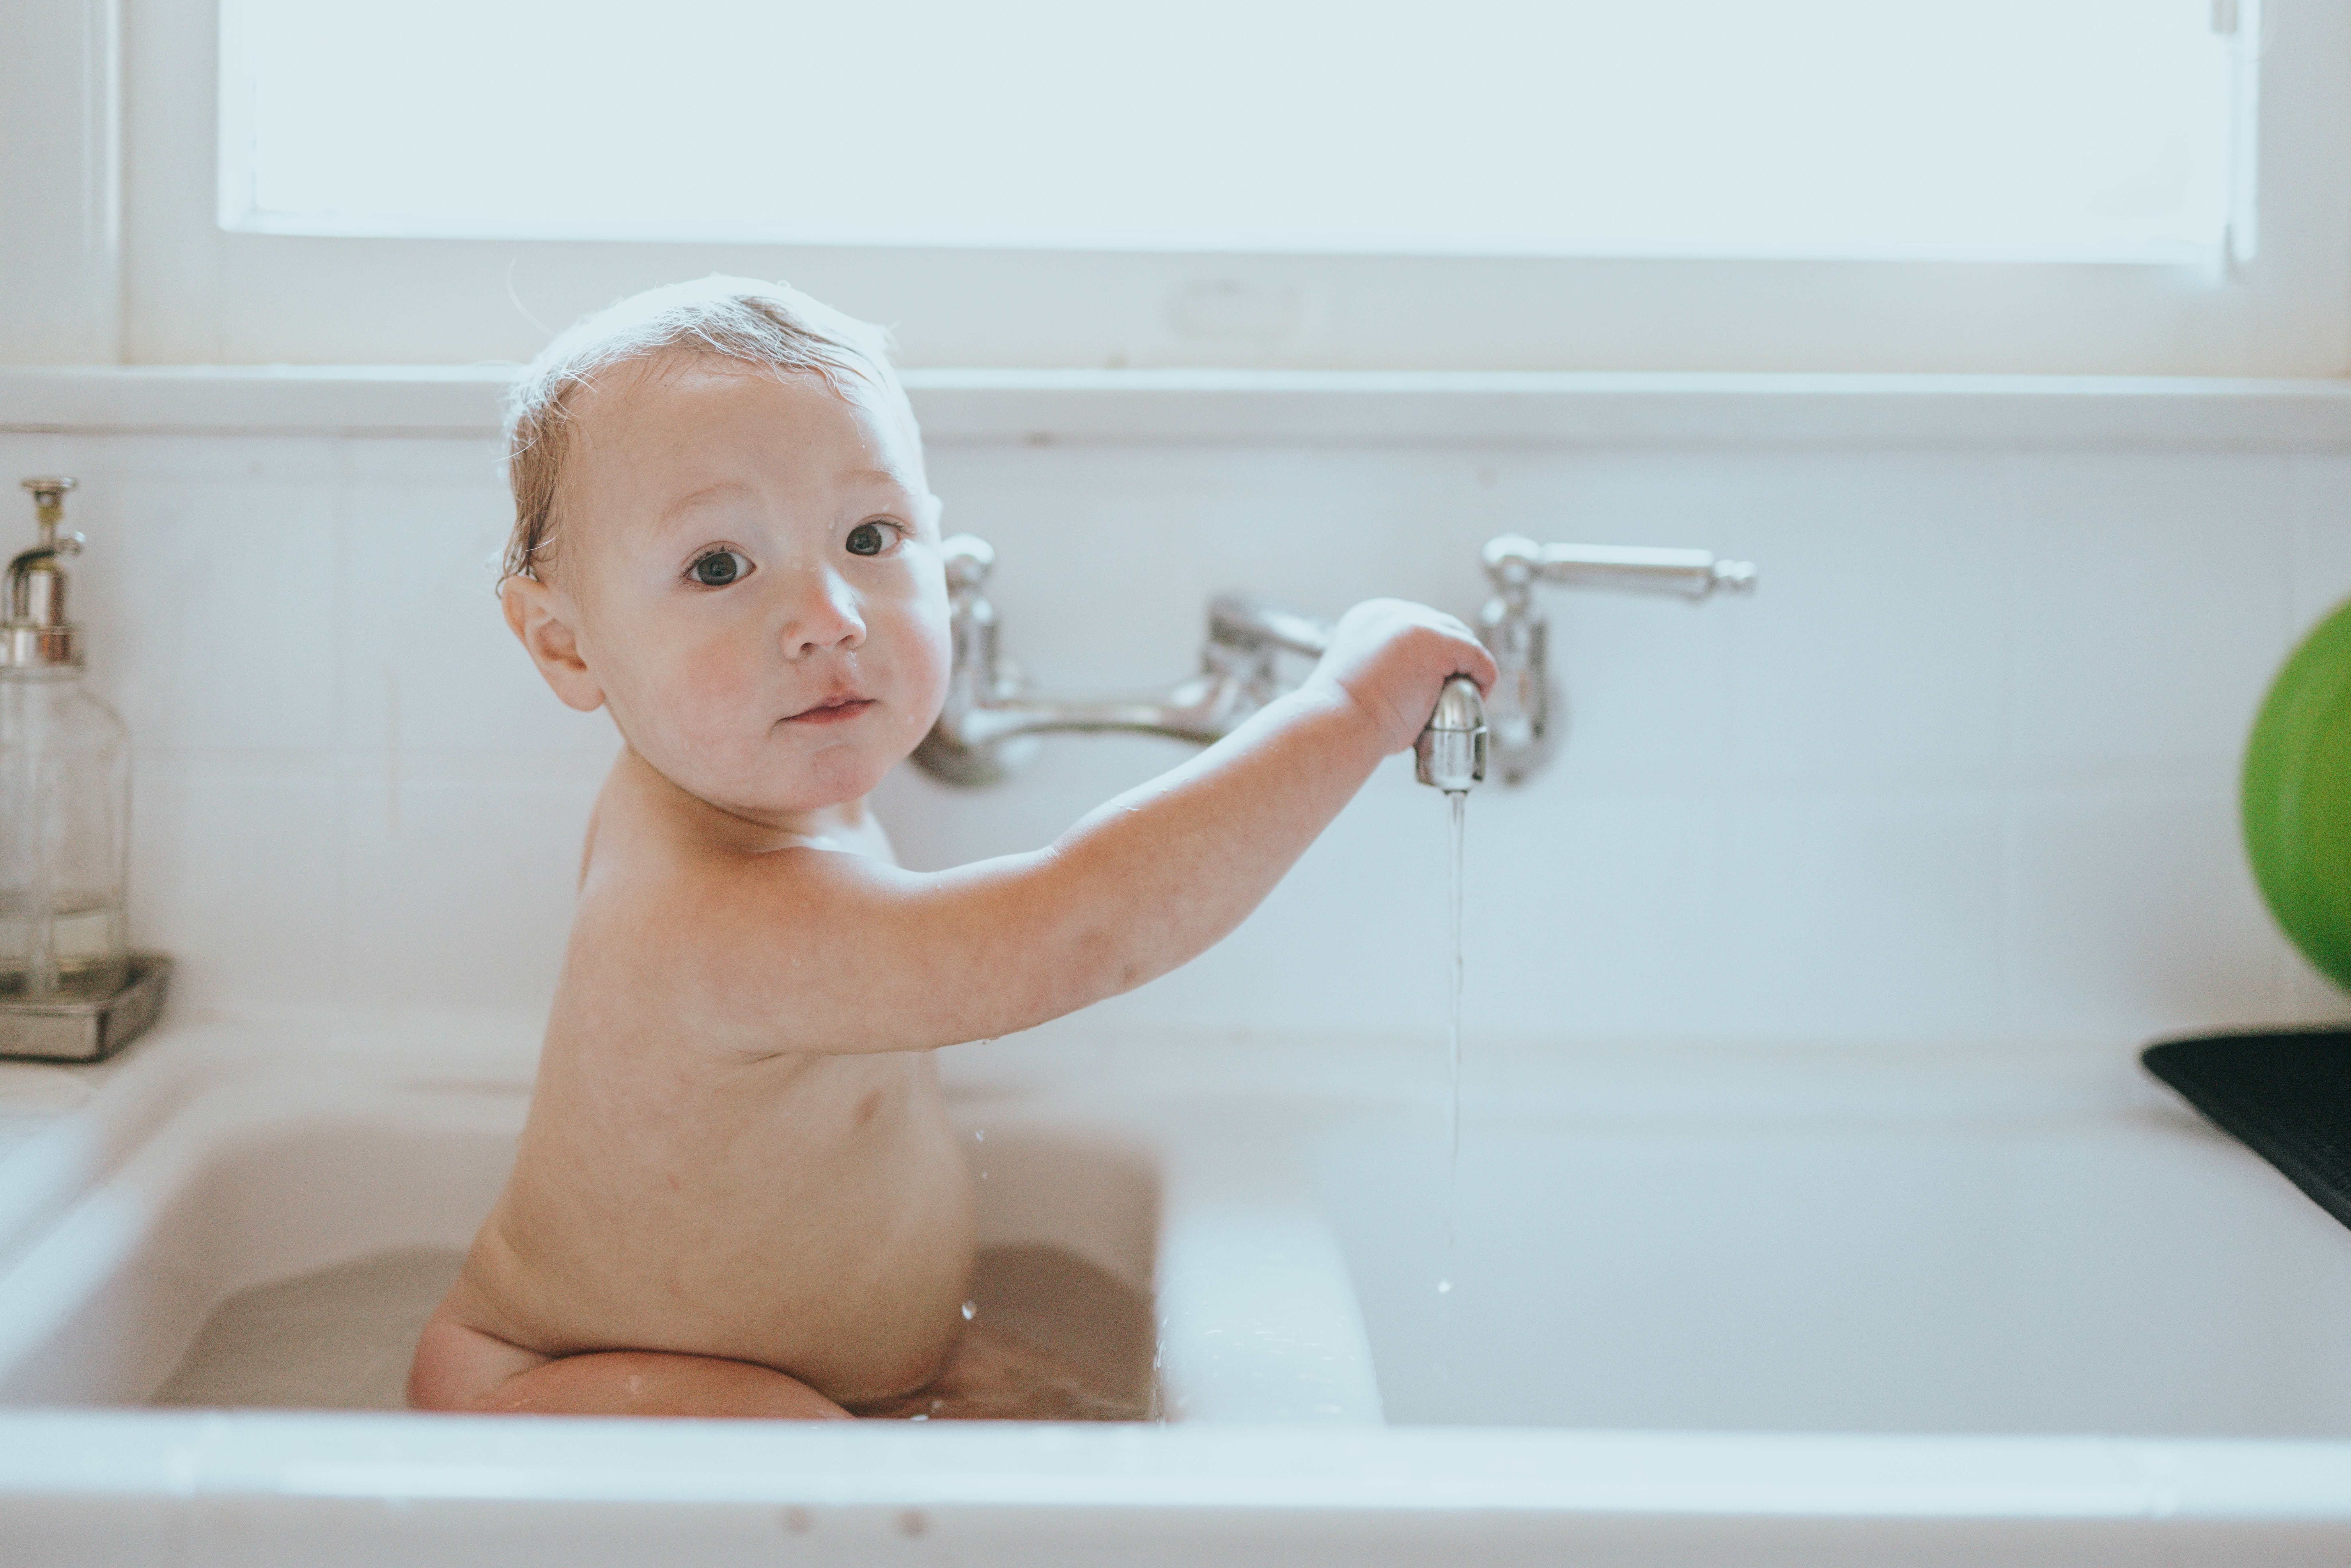 A baby sitting in the sink having a bath